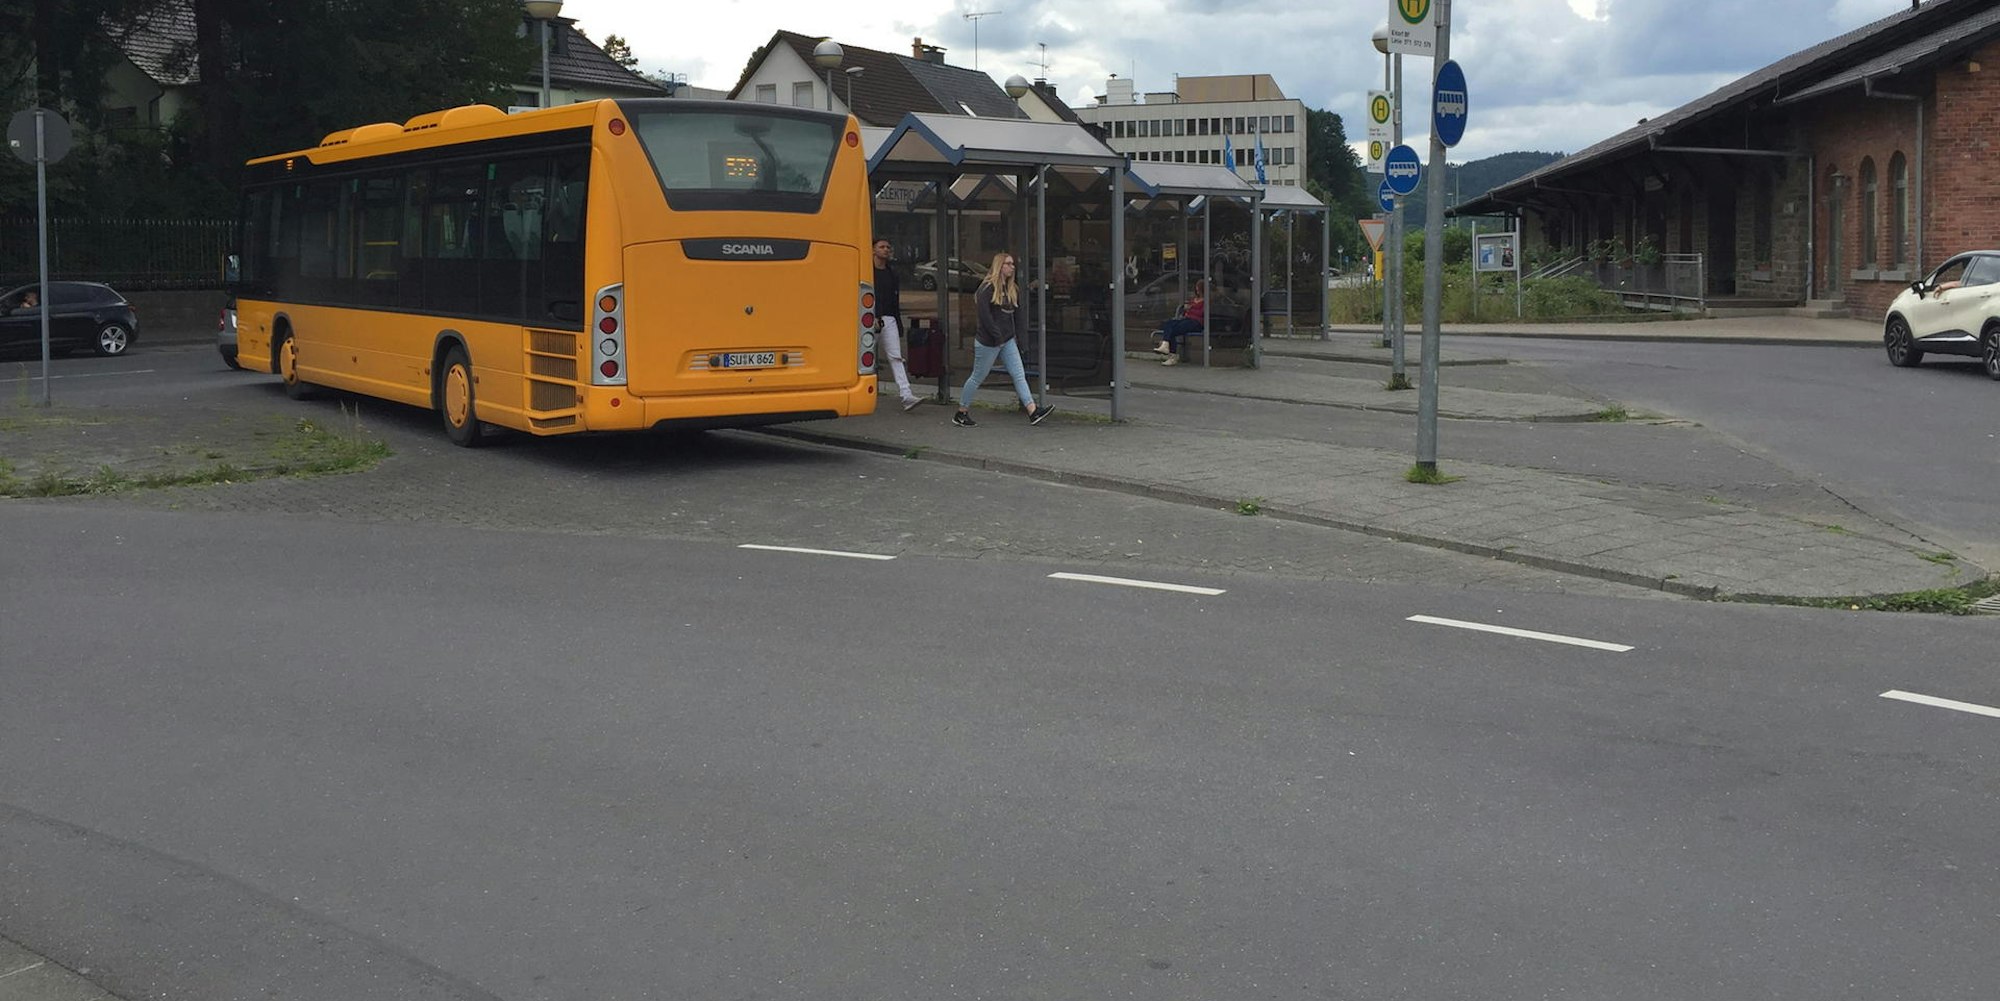 Busbahnhof_Eitorf